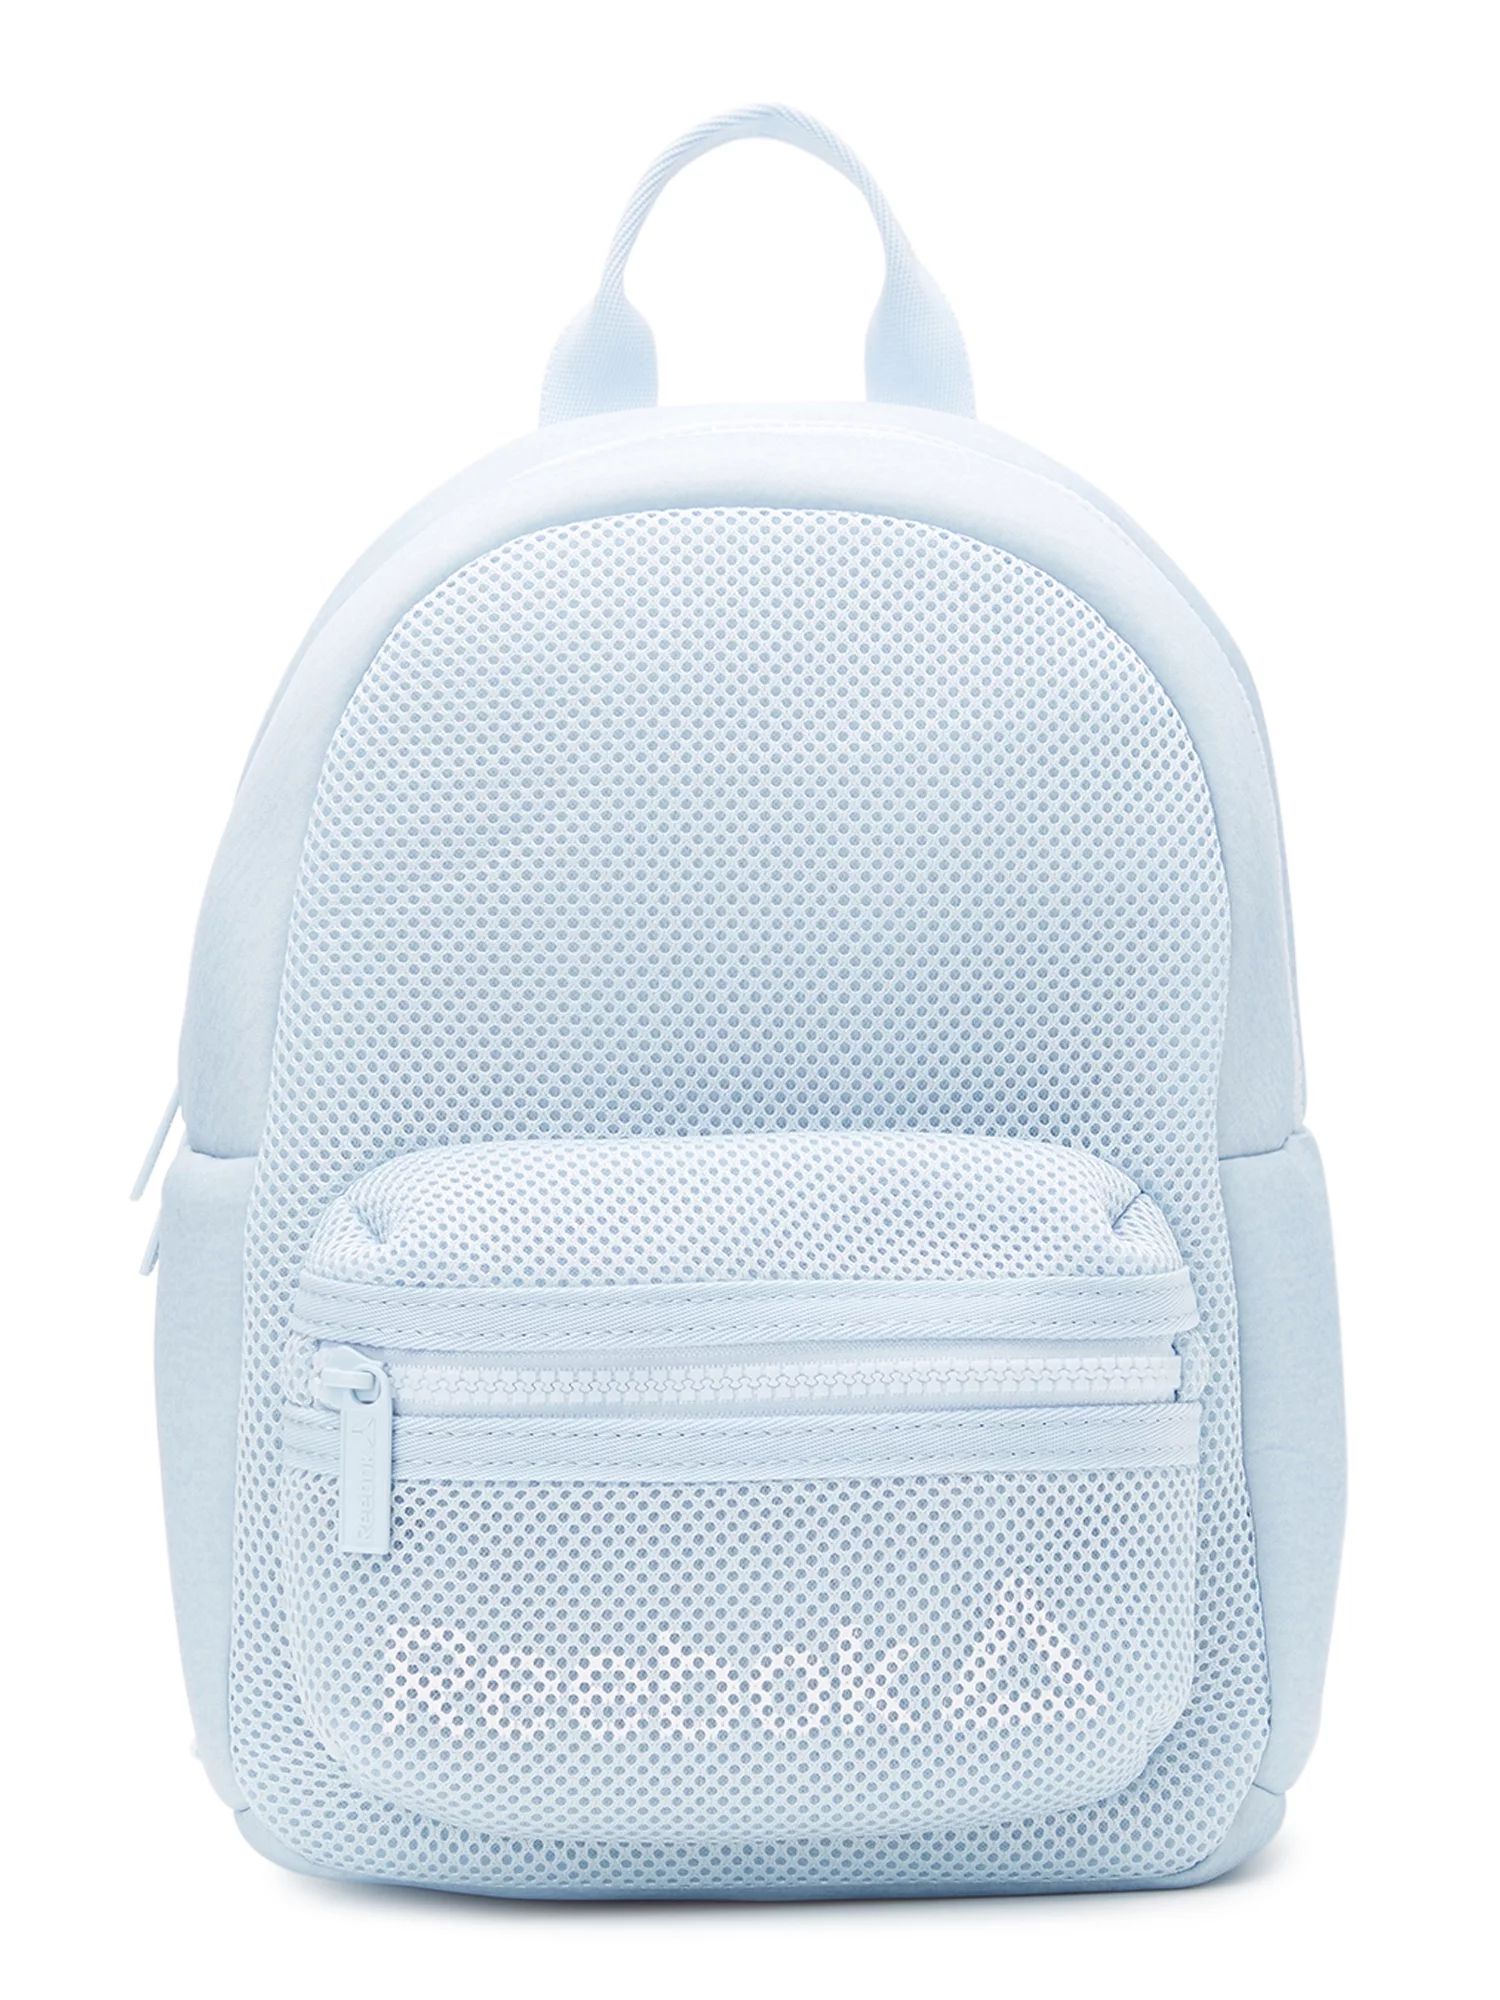 Reebok Women's Evie Mini Dome Backpack Blue | Walmart (US)